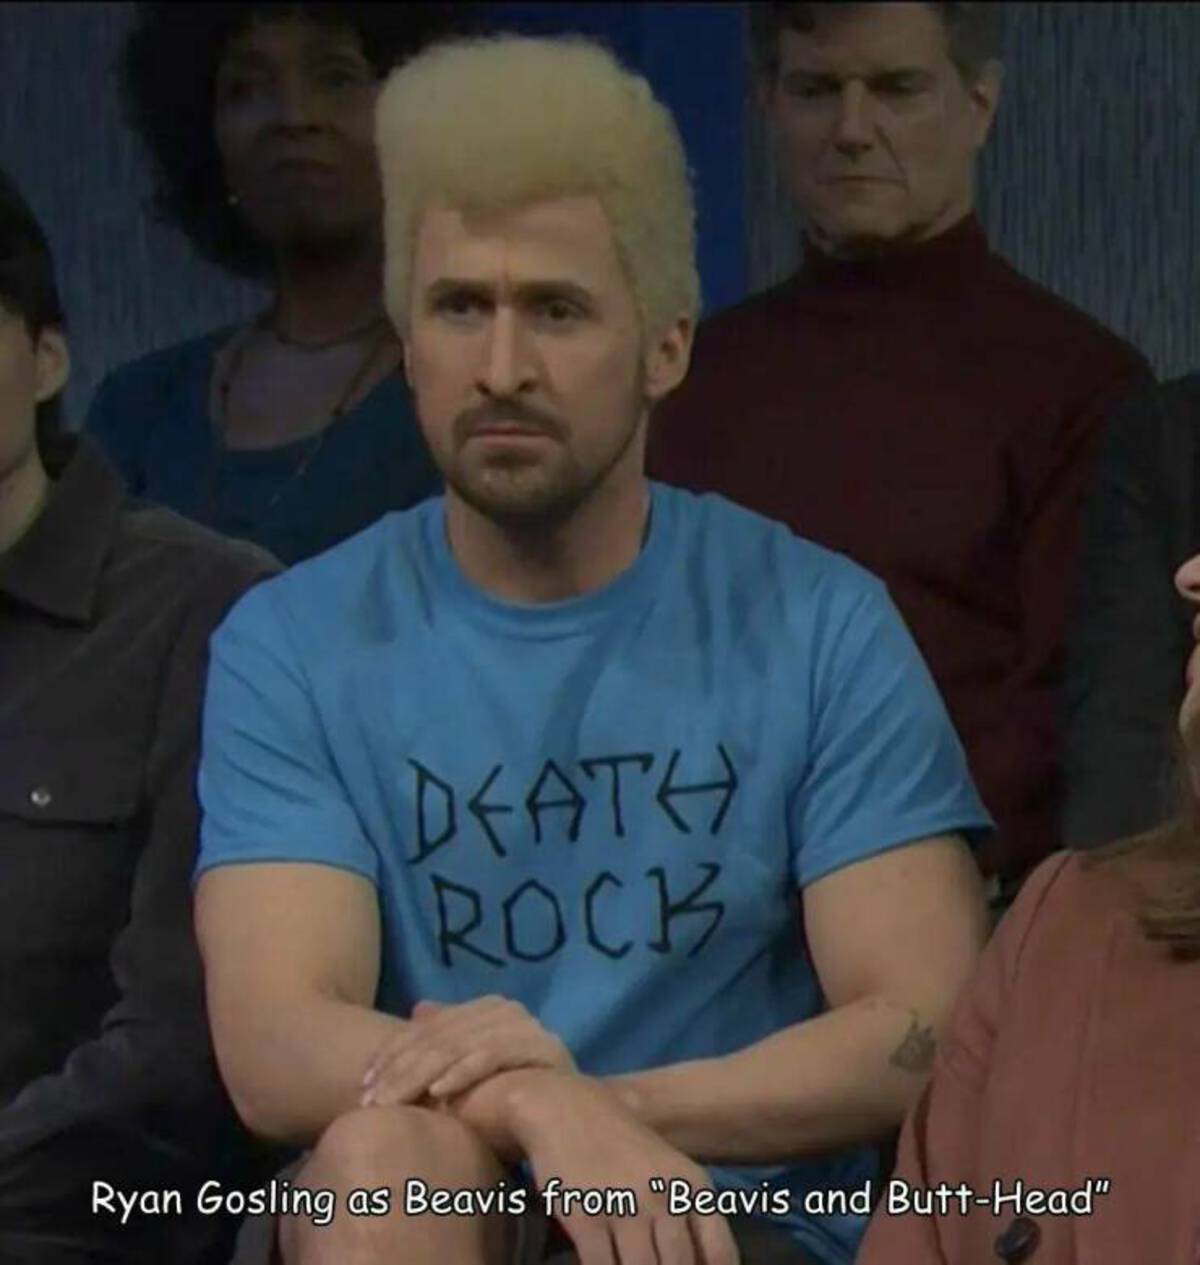 photo caption - Death Rock Ryan Gosling as Beavis from "Beavis and ButtHead"